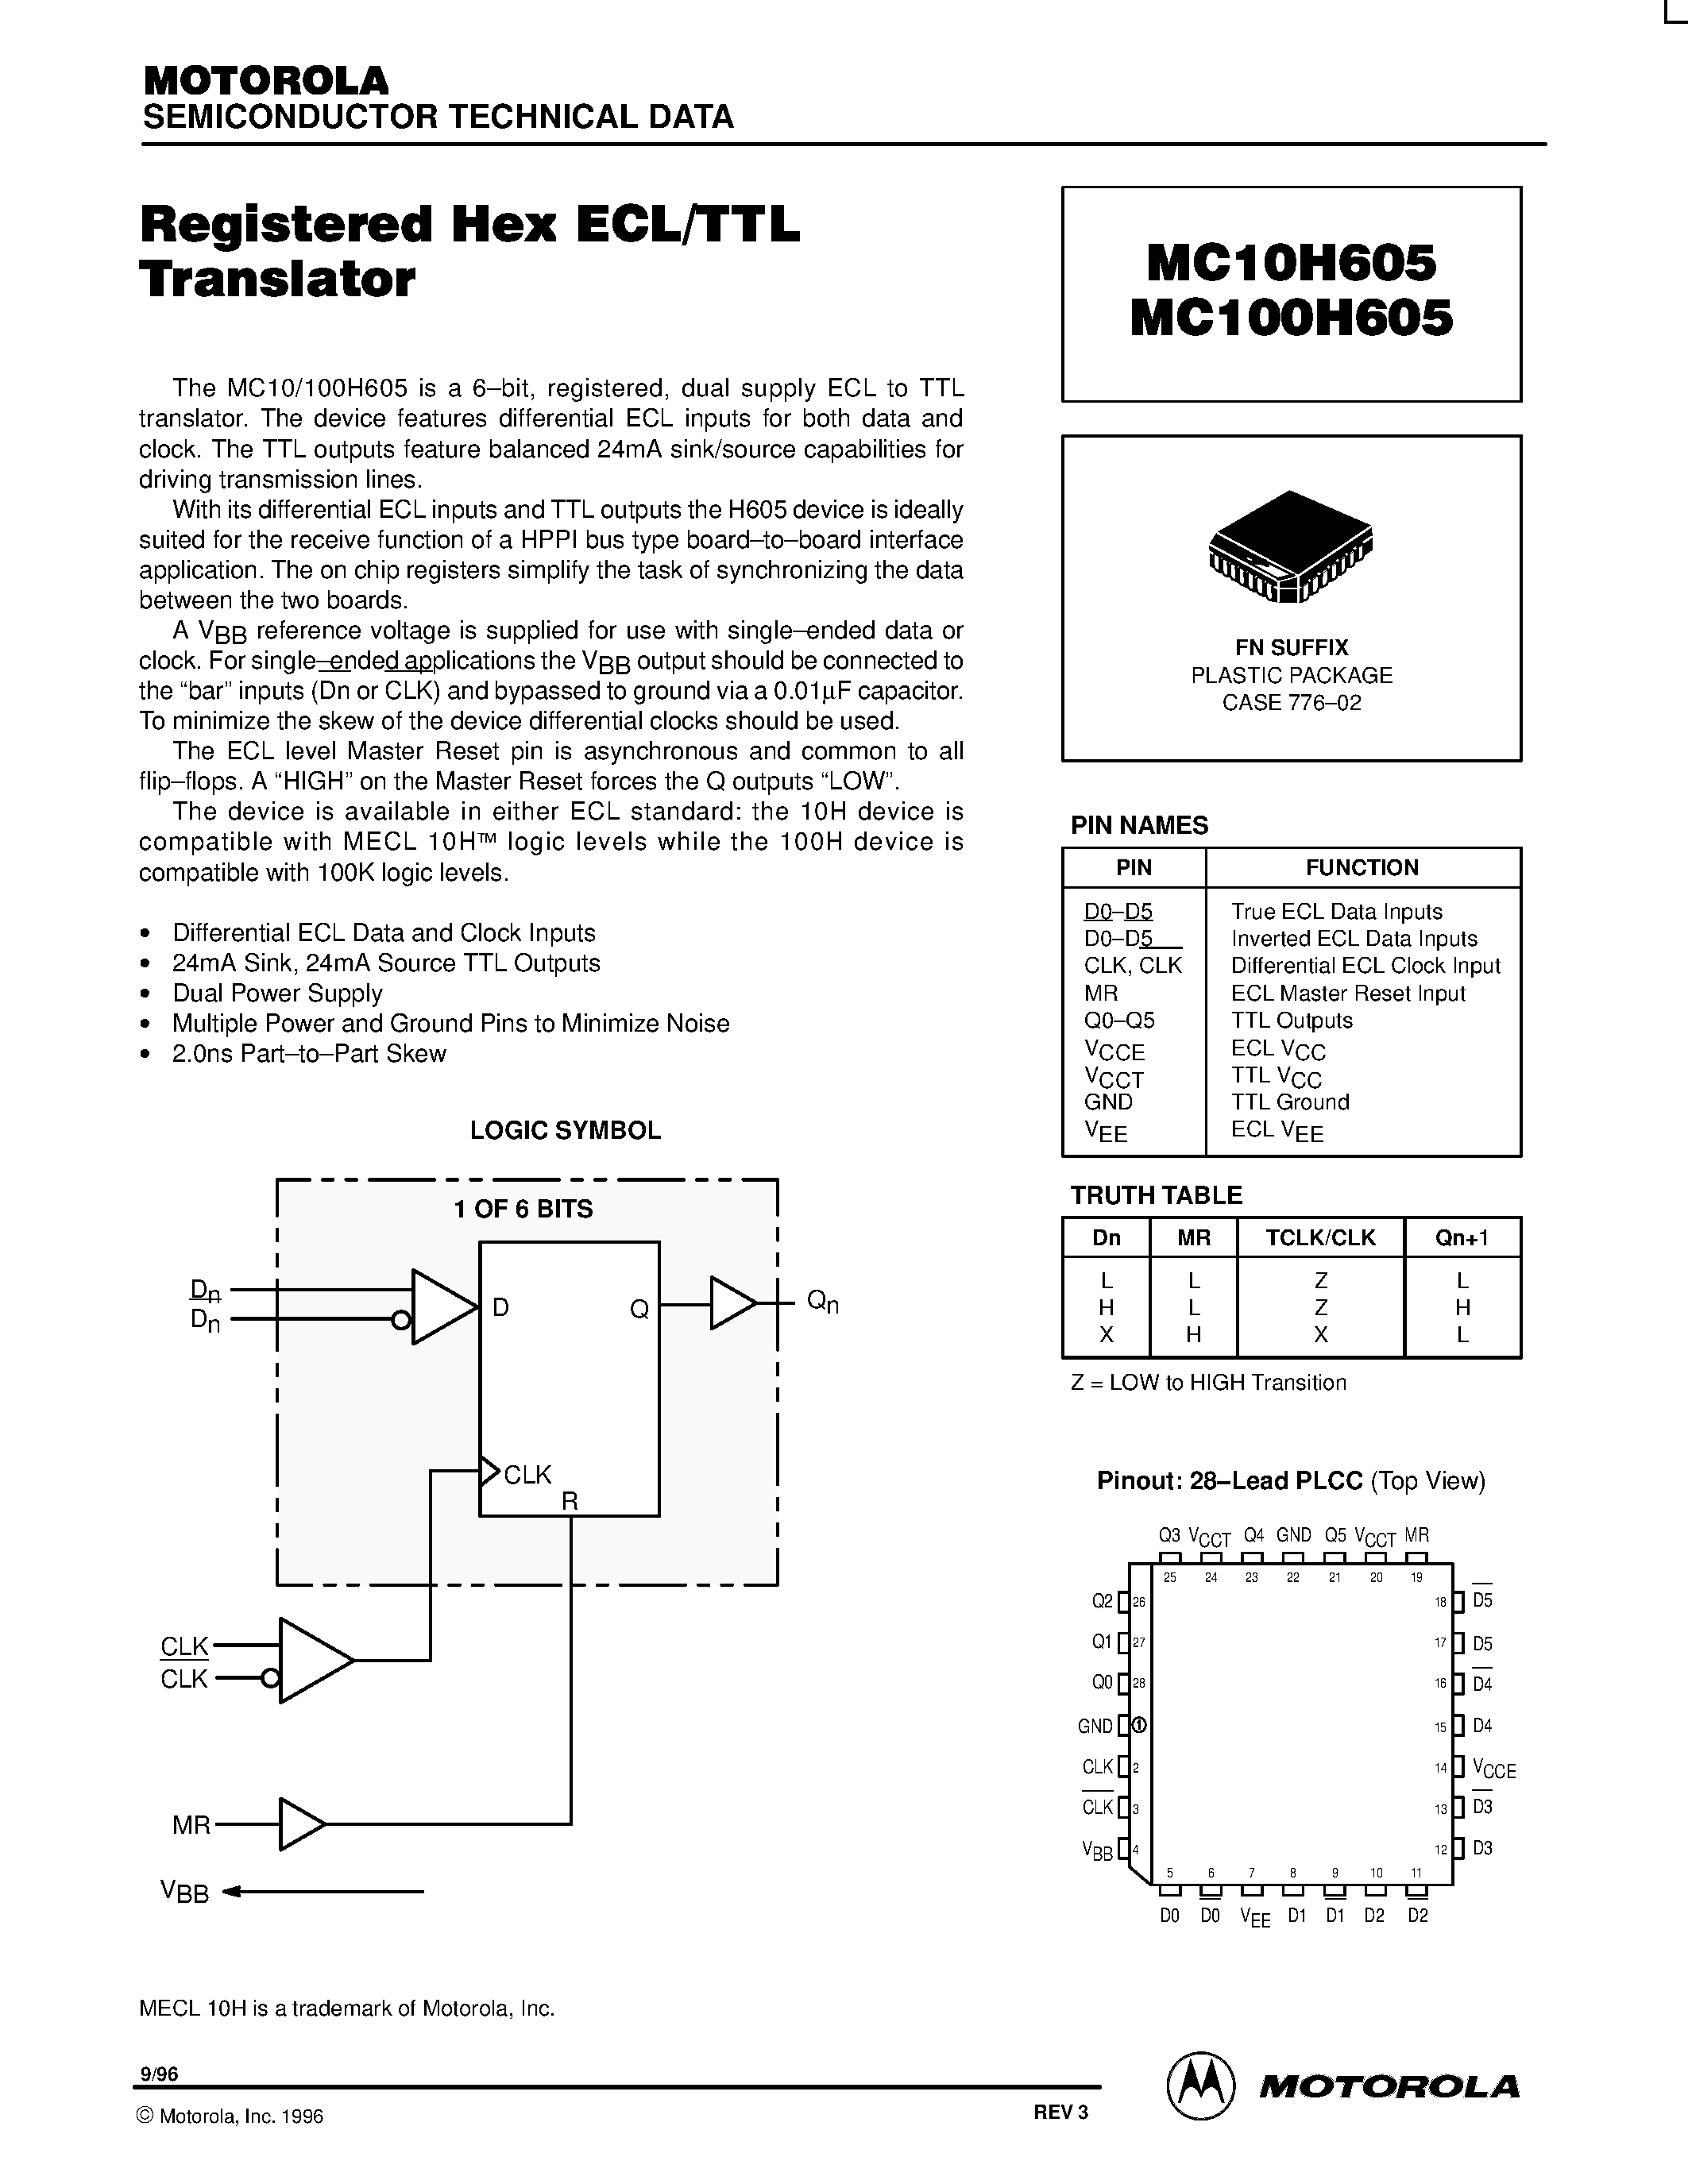 Datasheet MC10H605 - Registered Hex ECL/TTL Translator page 1